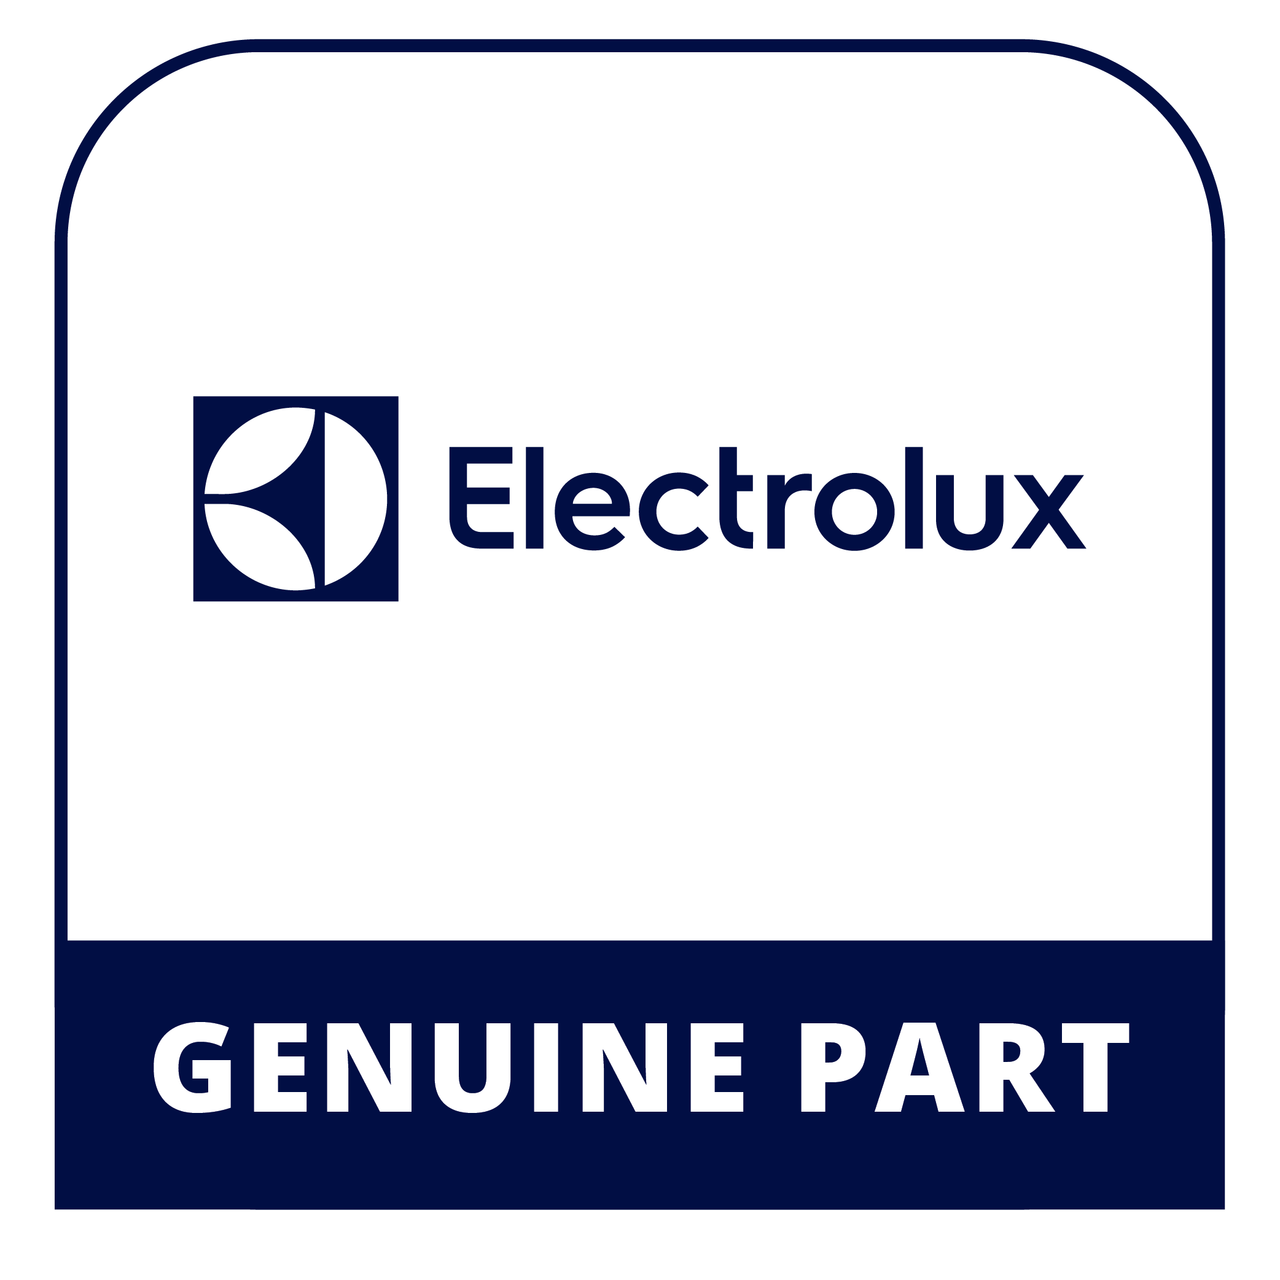 Frigidaire - Electrolux 5303918779 - Housing Kit - Genuine Electrolux Part